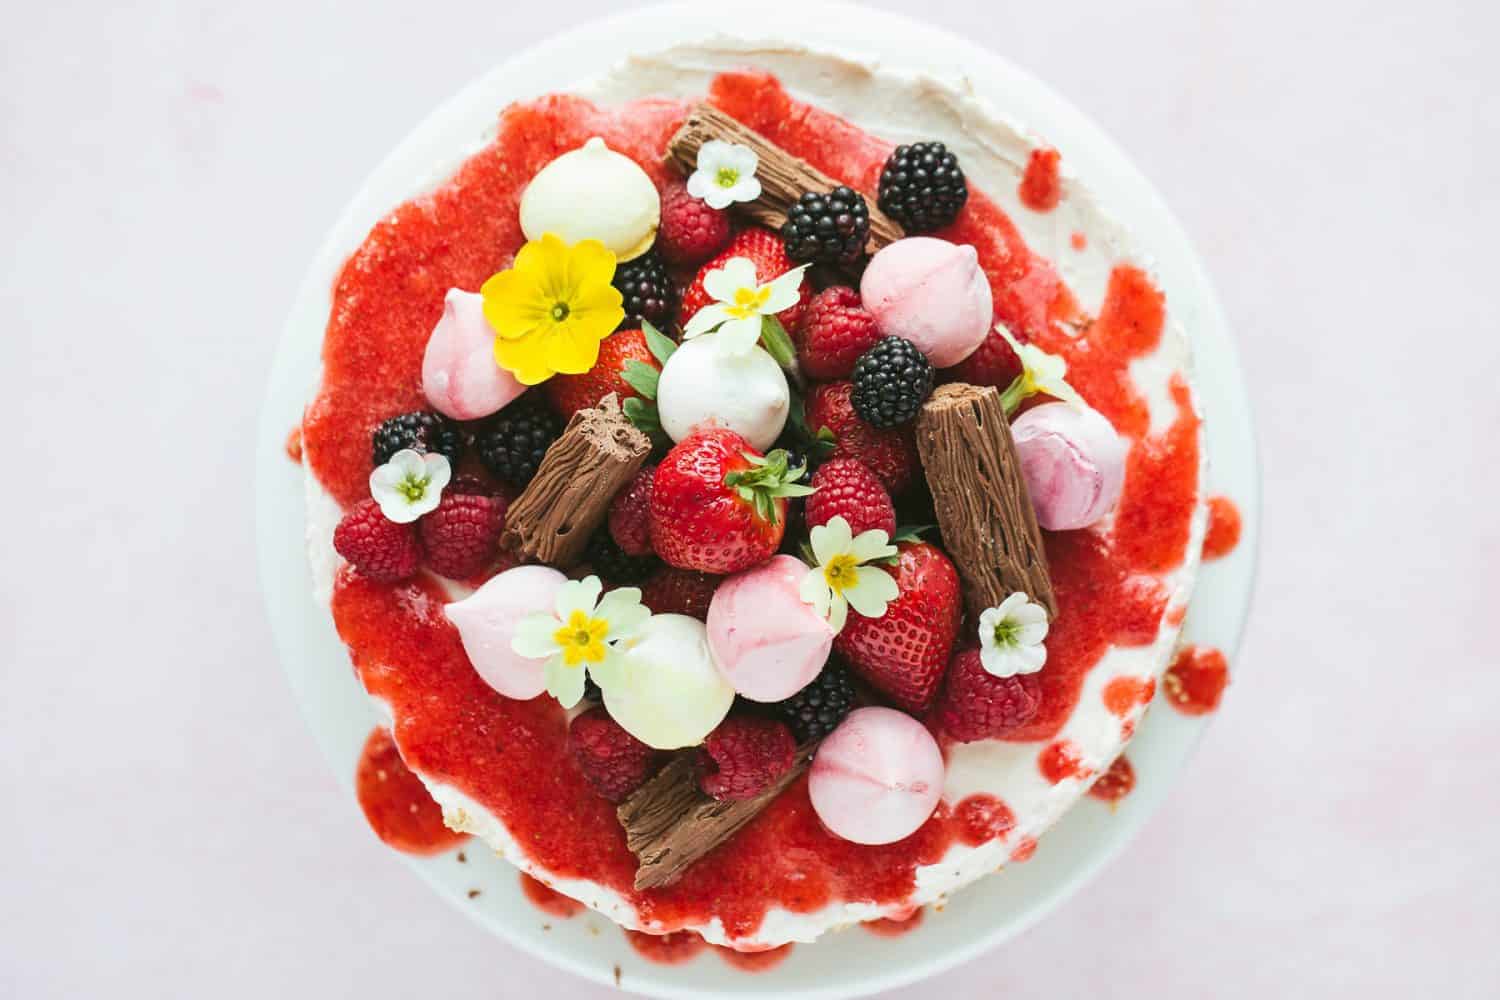 mini meringues, strawberries, blackberries, raspberries and chocolate flakes on top of a cheesecake. 